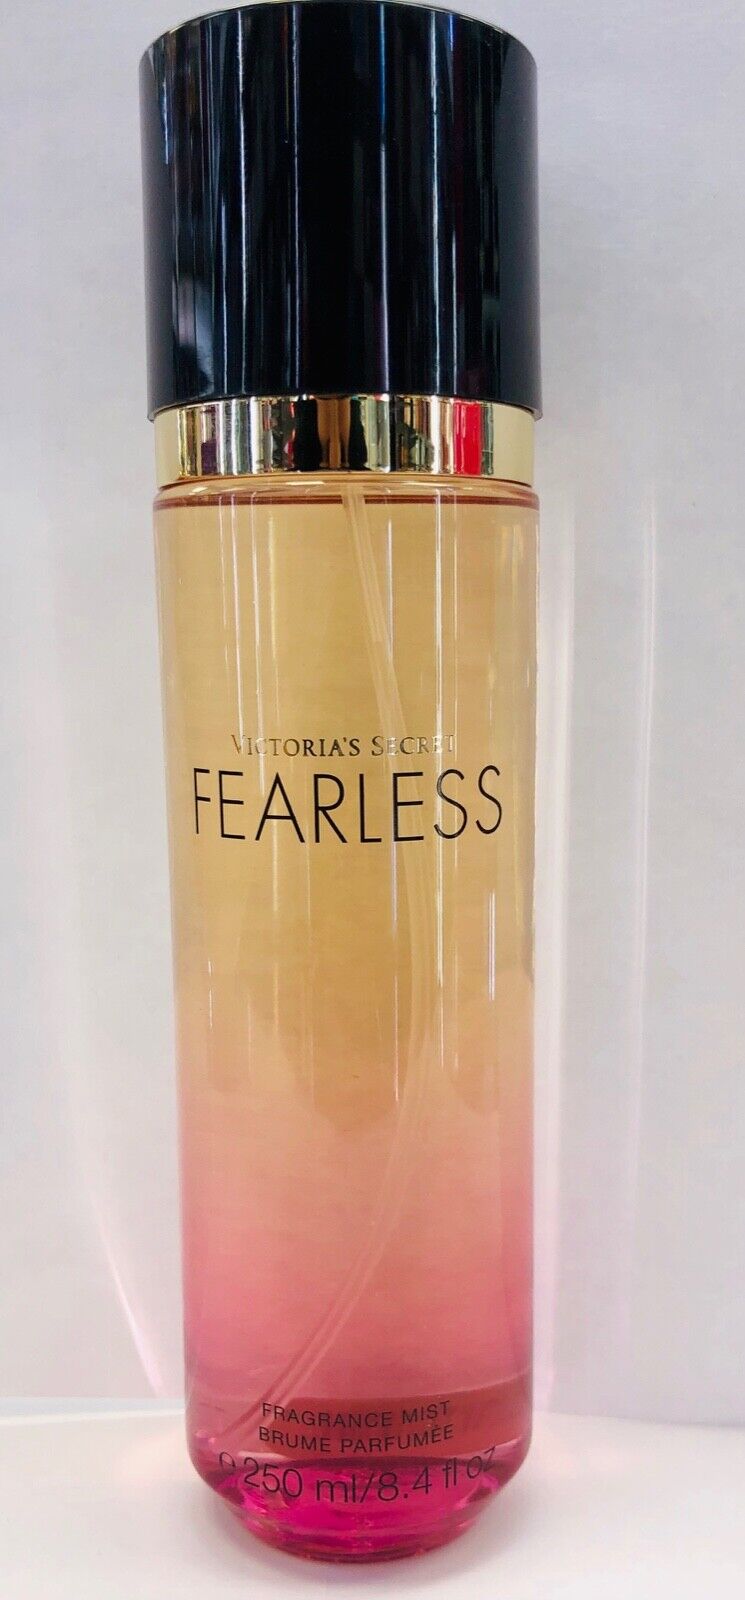 1 Victoria's Secret Fearless Fragrance Body Mist Spray 8.4 Fl.oz 